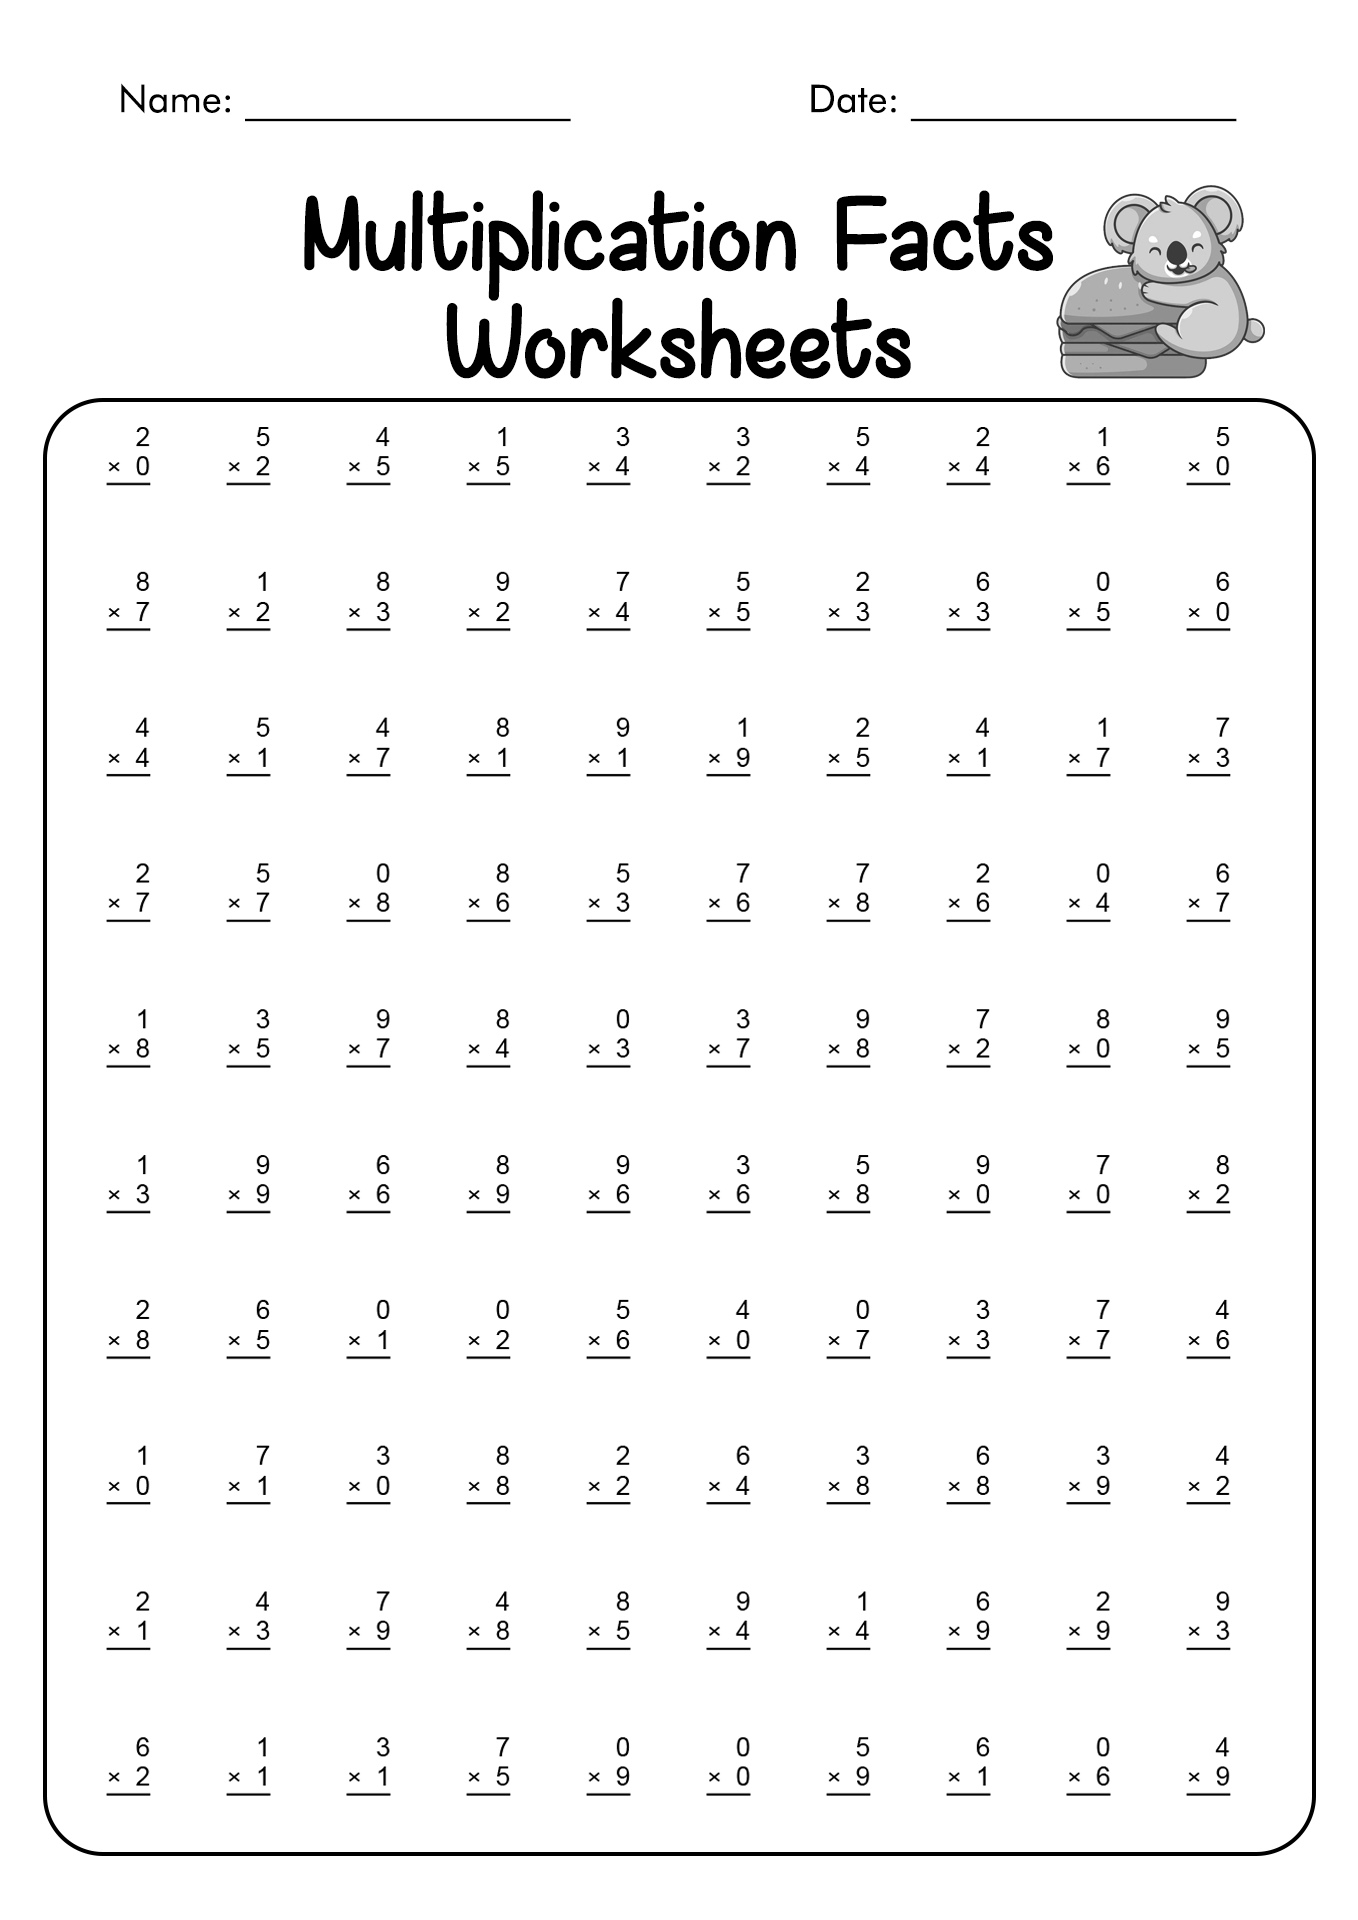 Multiplication Facts 0 5 Worksheets Pdf